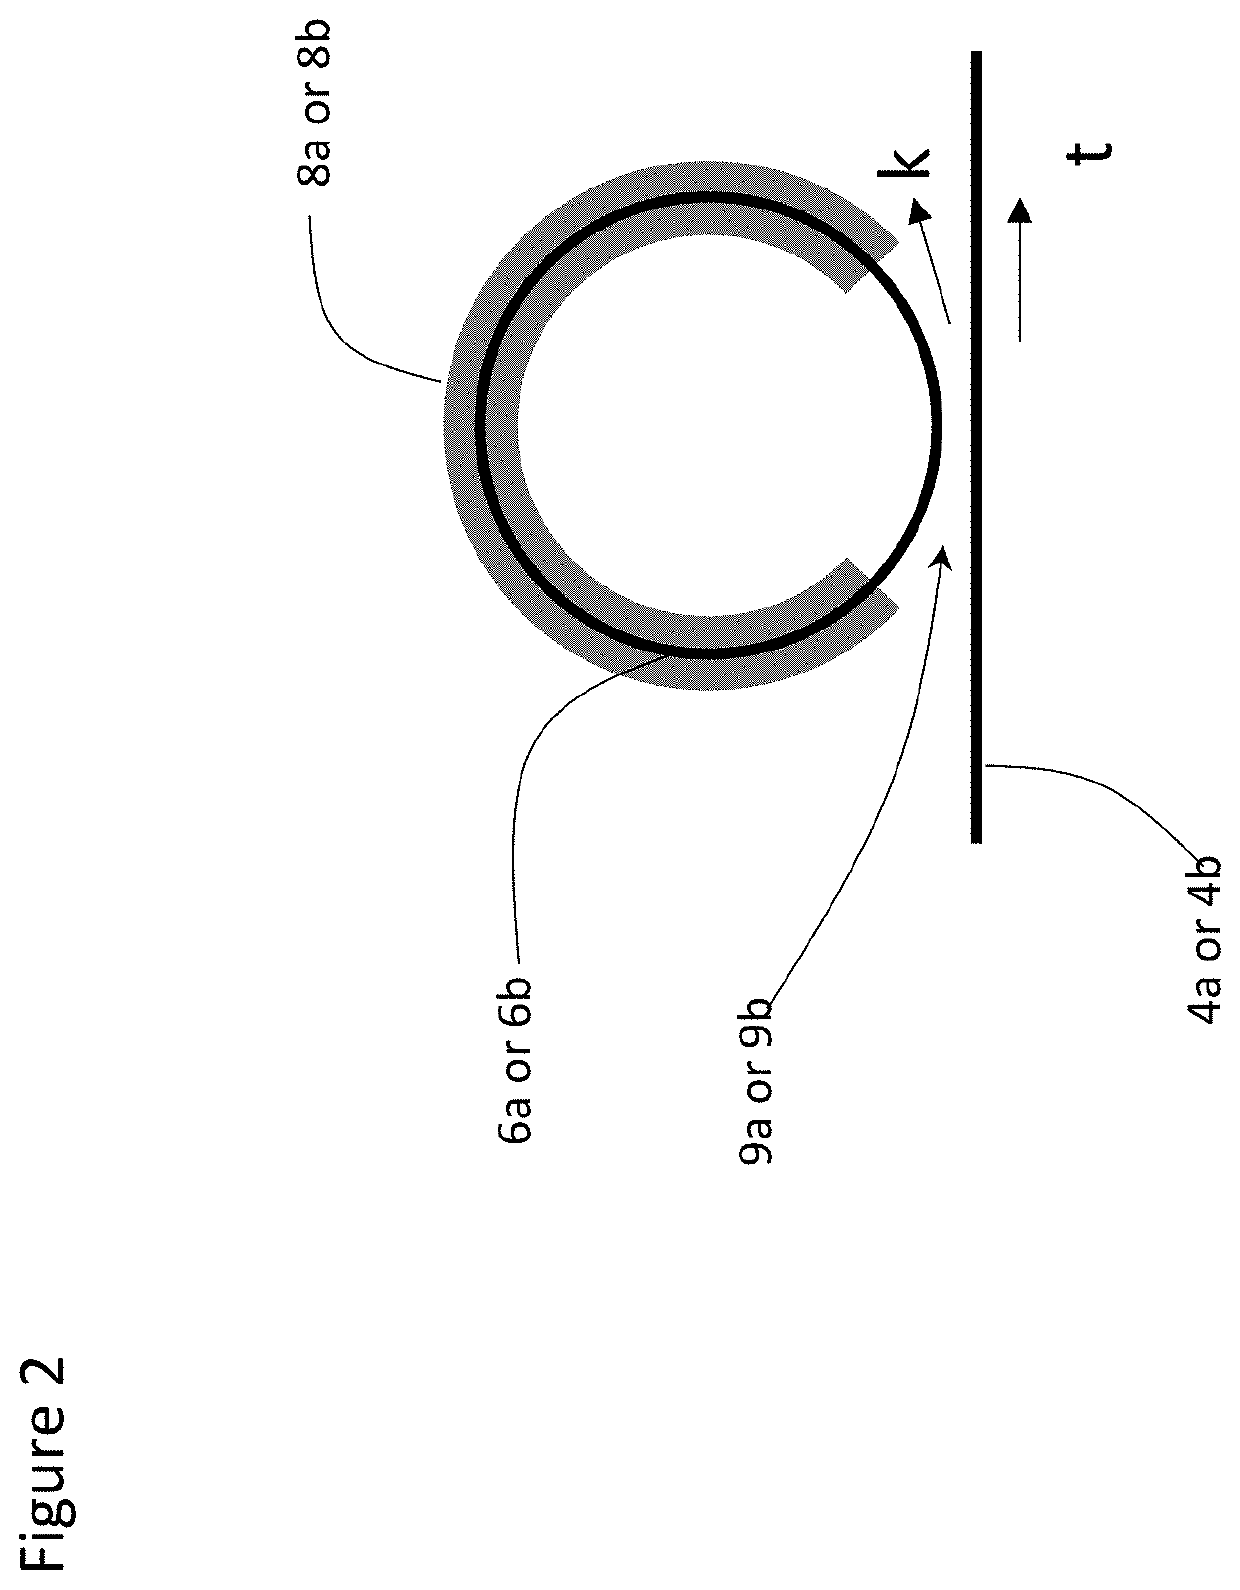 Null bias mach-zehnder interferometer with ring resonators